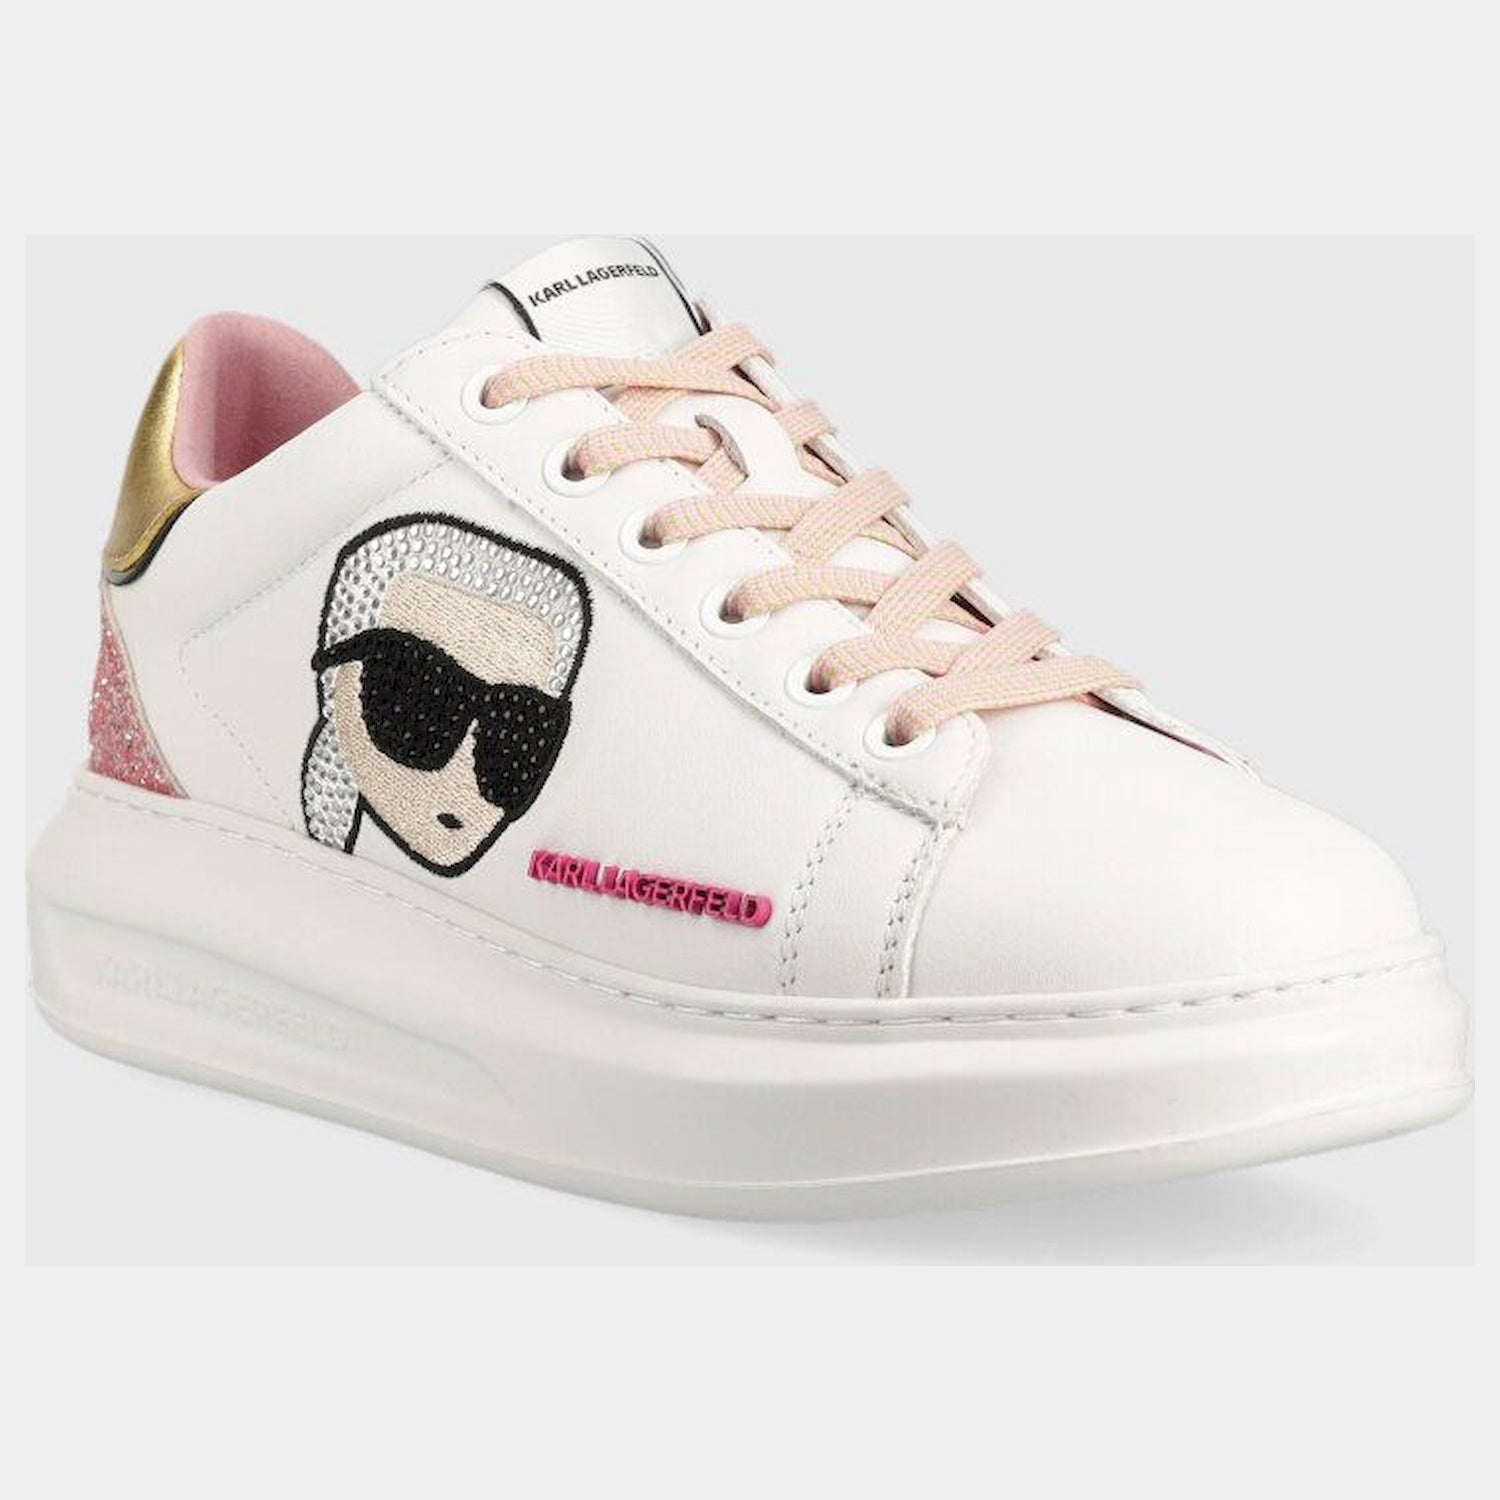 Karl Lagerfeld Sapatilhas Sneakers Shoes Kl62570n Whi Pink Branco Rosa_shot2